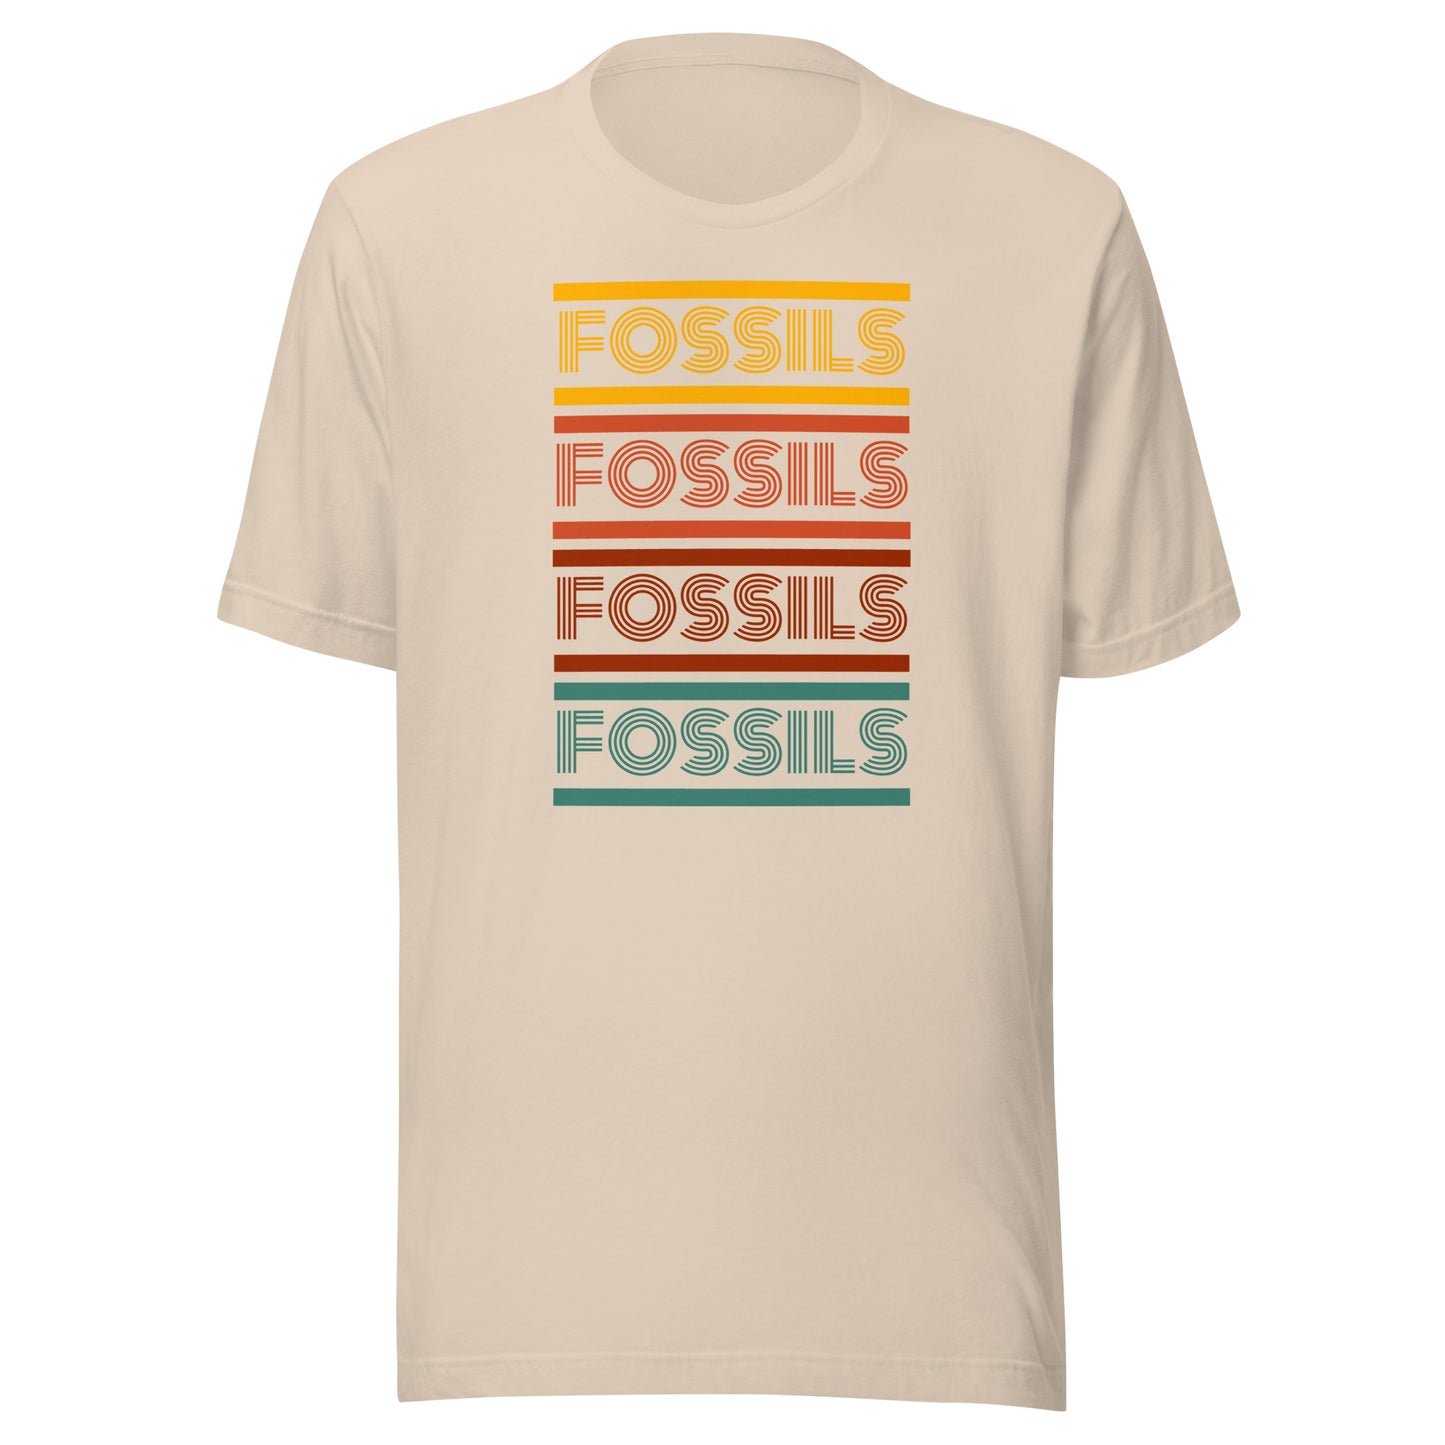 Fossils Fossils Fossils T-Shirt (Unisex)